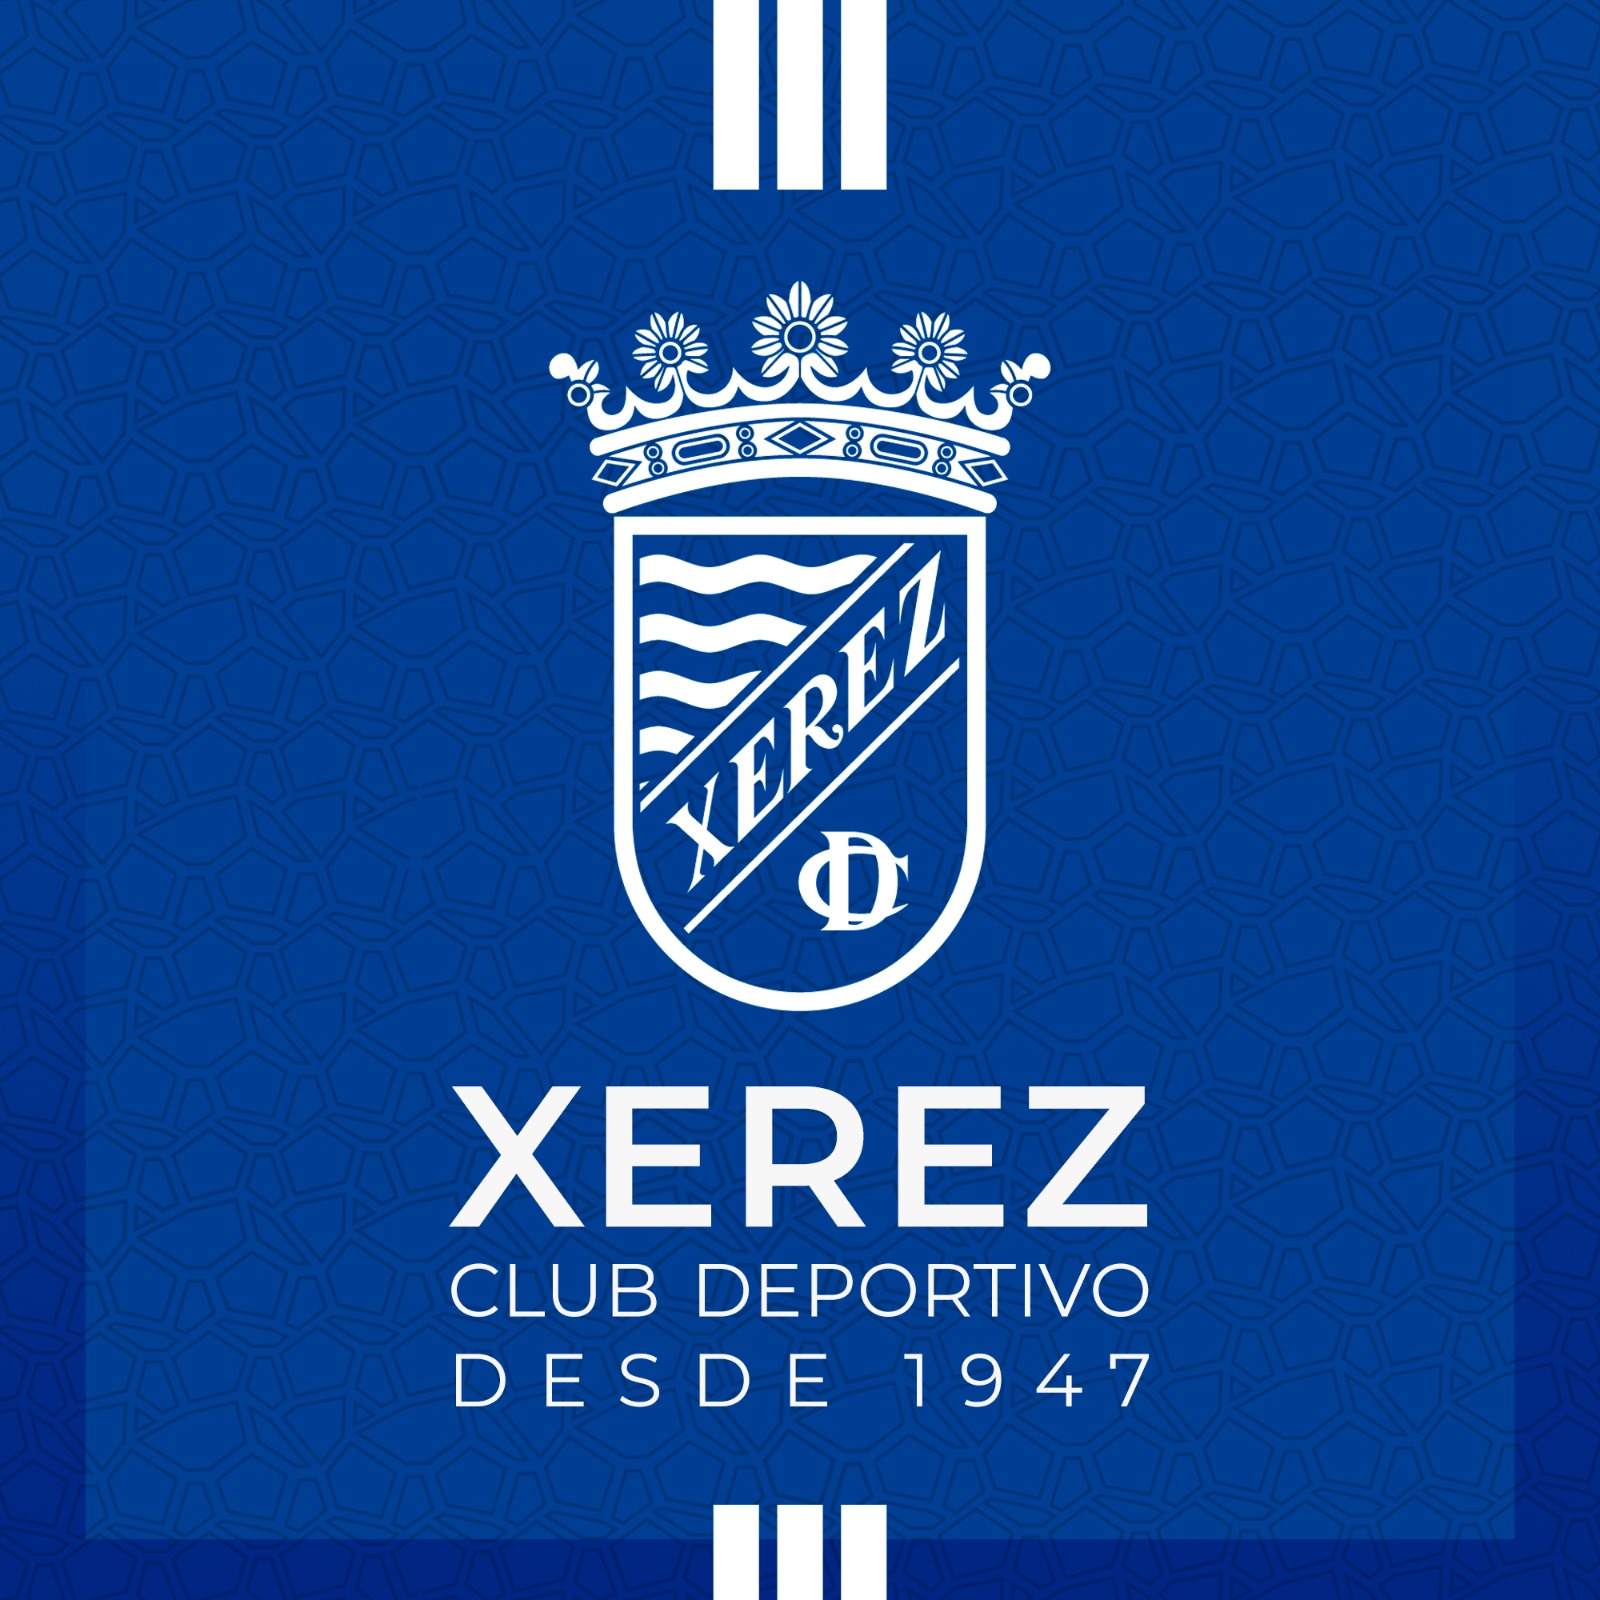 Xerez Club Deportivo on Twitter: 